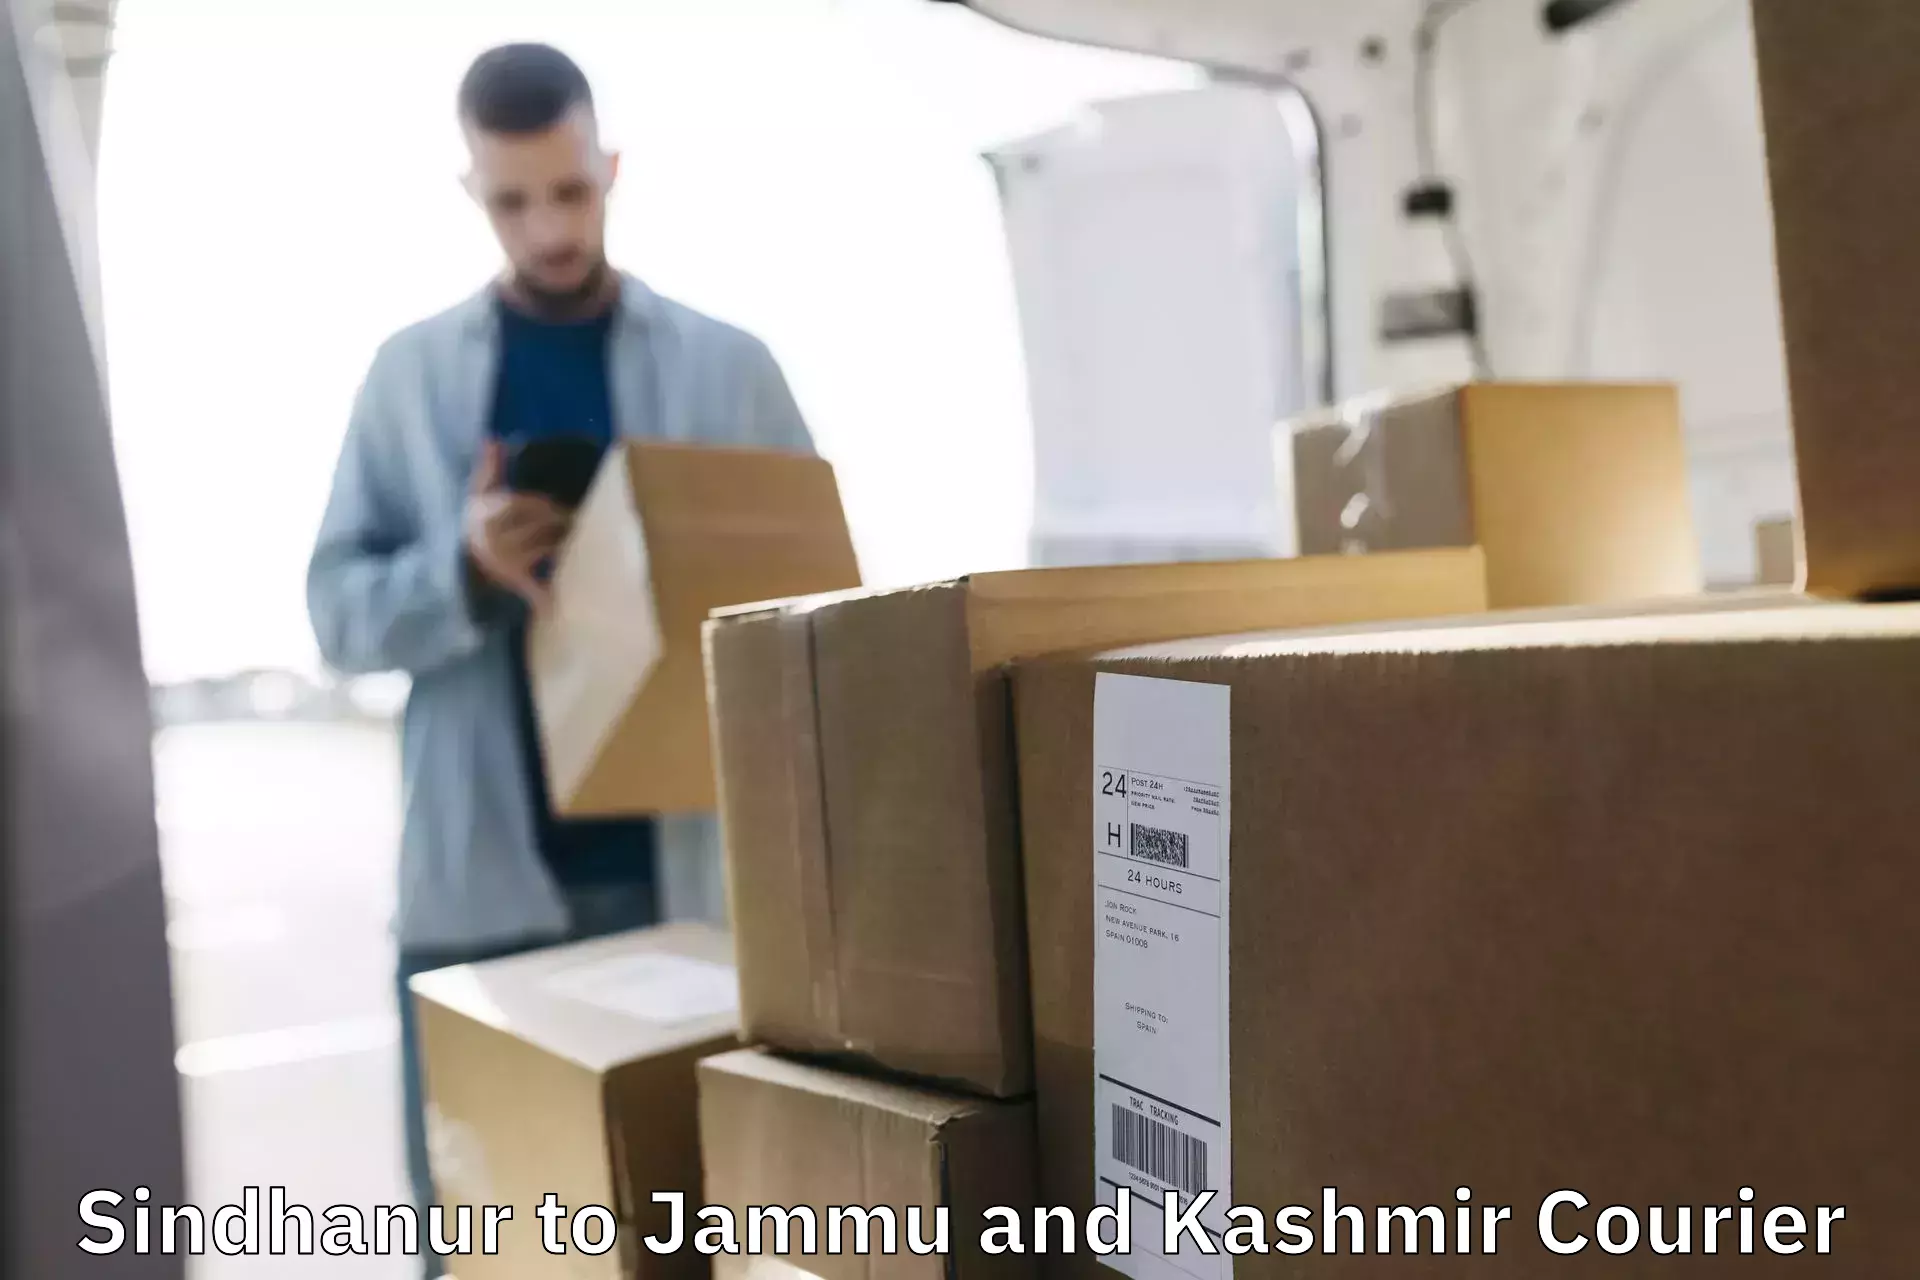 Courier service partnerships Sindhanur to University of Kashmir Srinagar